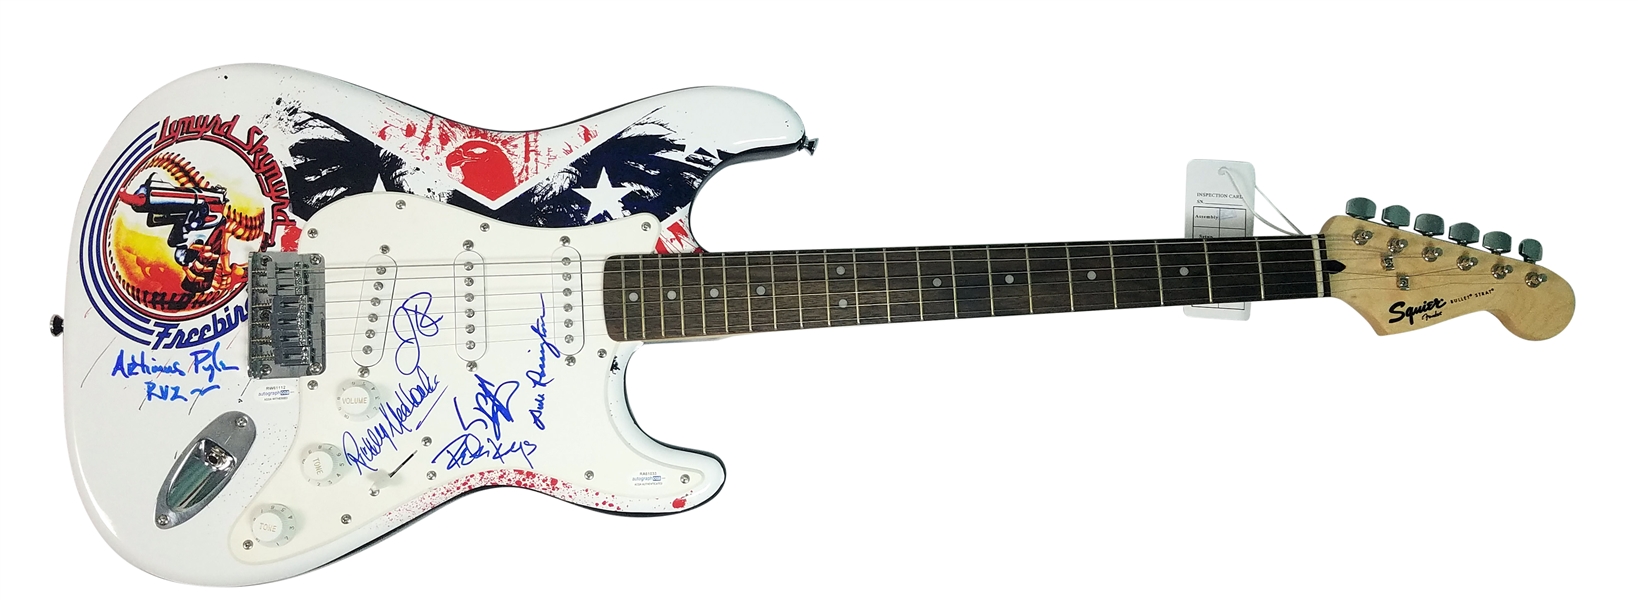 Lynyrd Skynyrd Rare Group Signed Fender Squier Stratocaster Guitar w/ 6 Signatures & Custom Artwork! (ACOA)